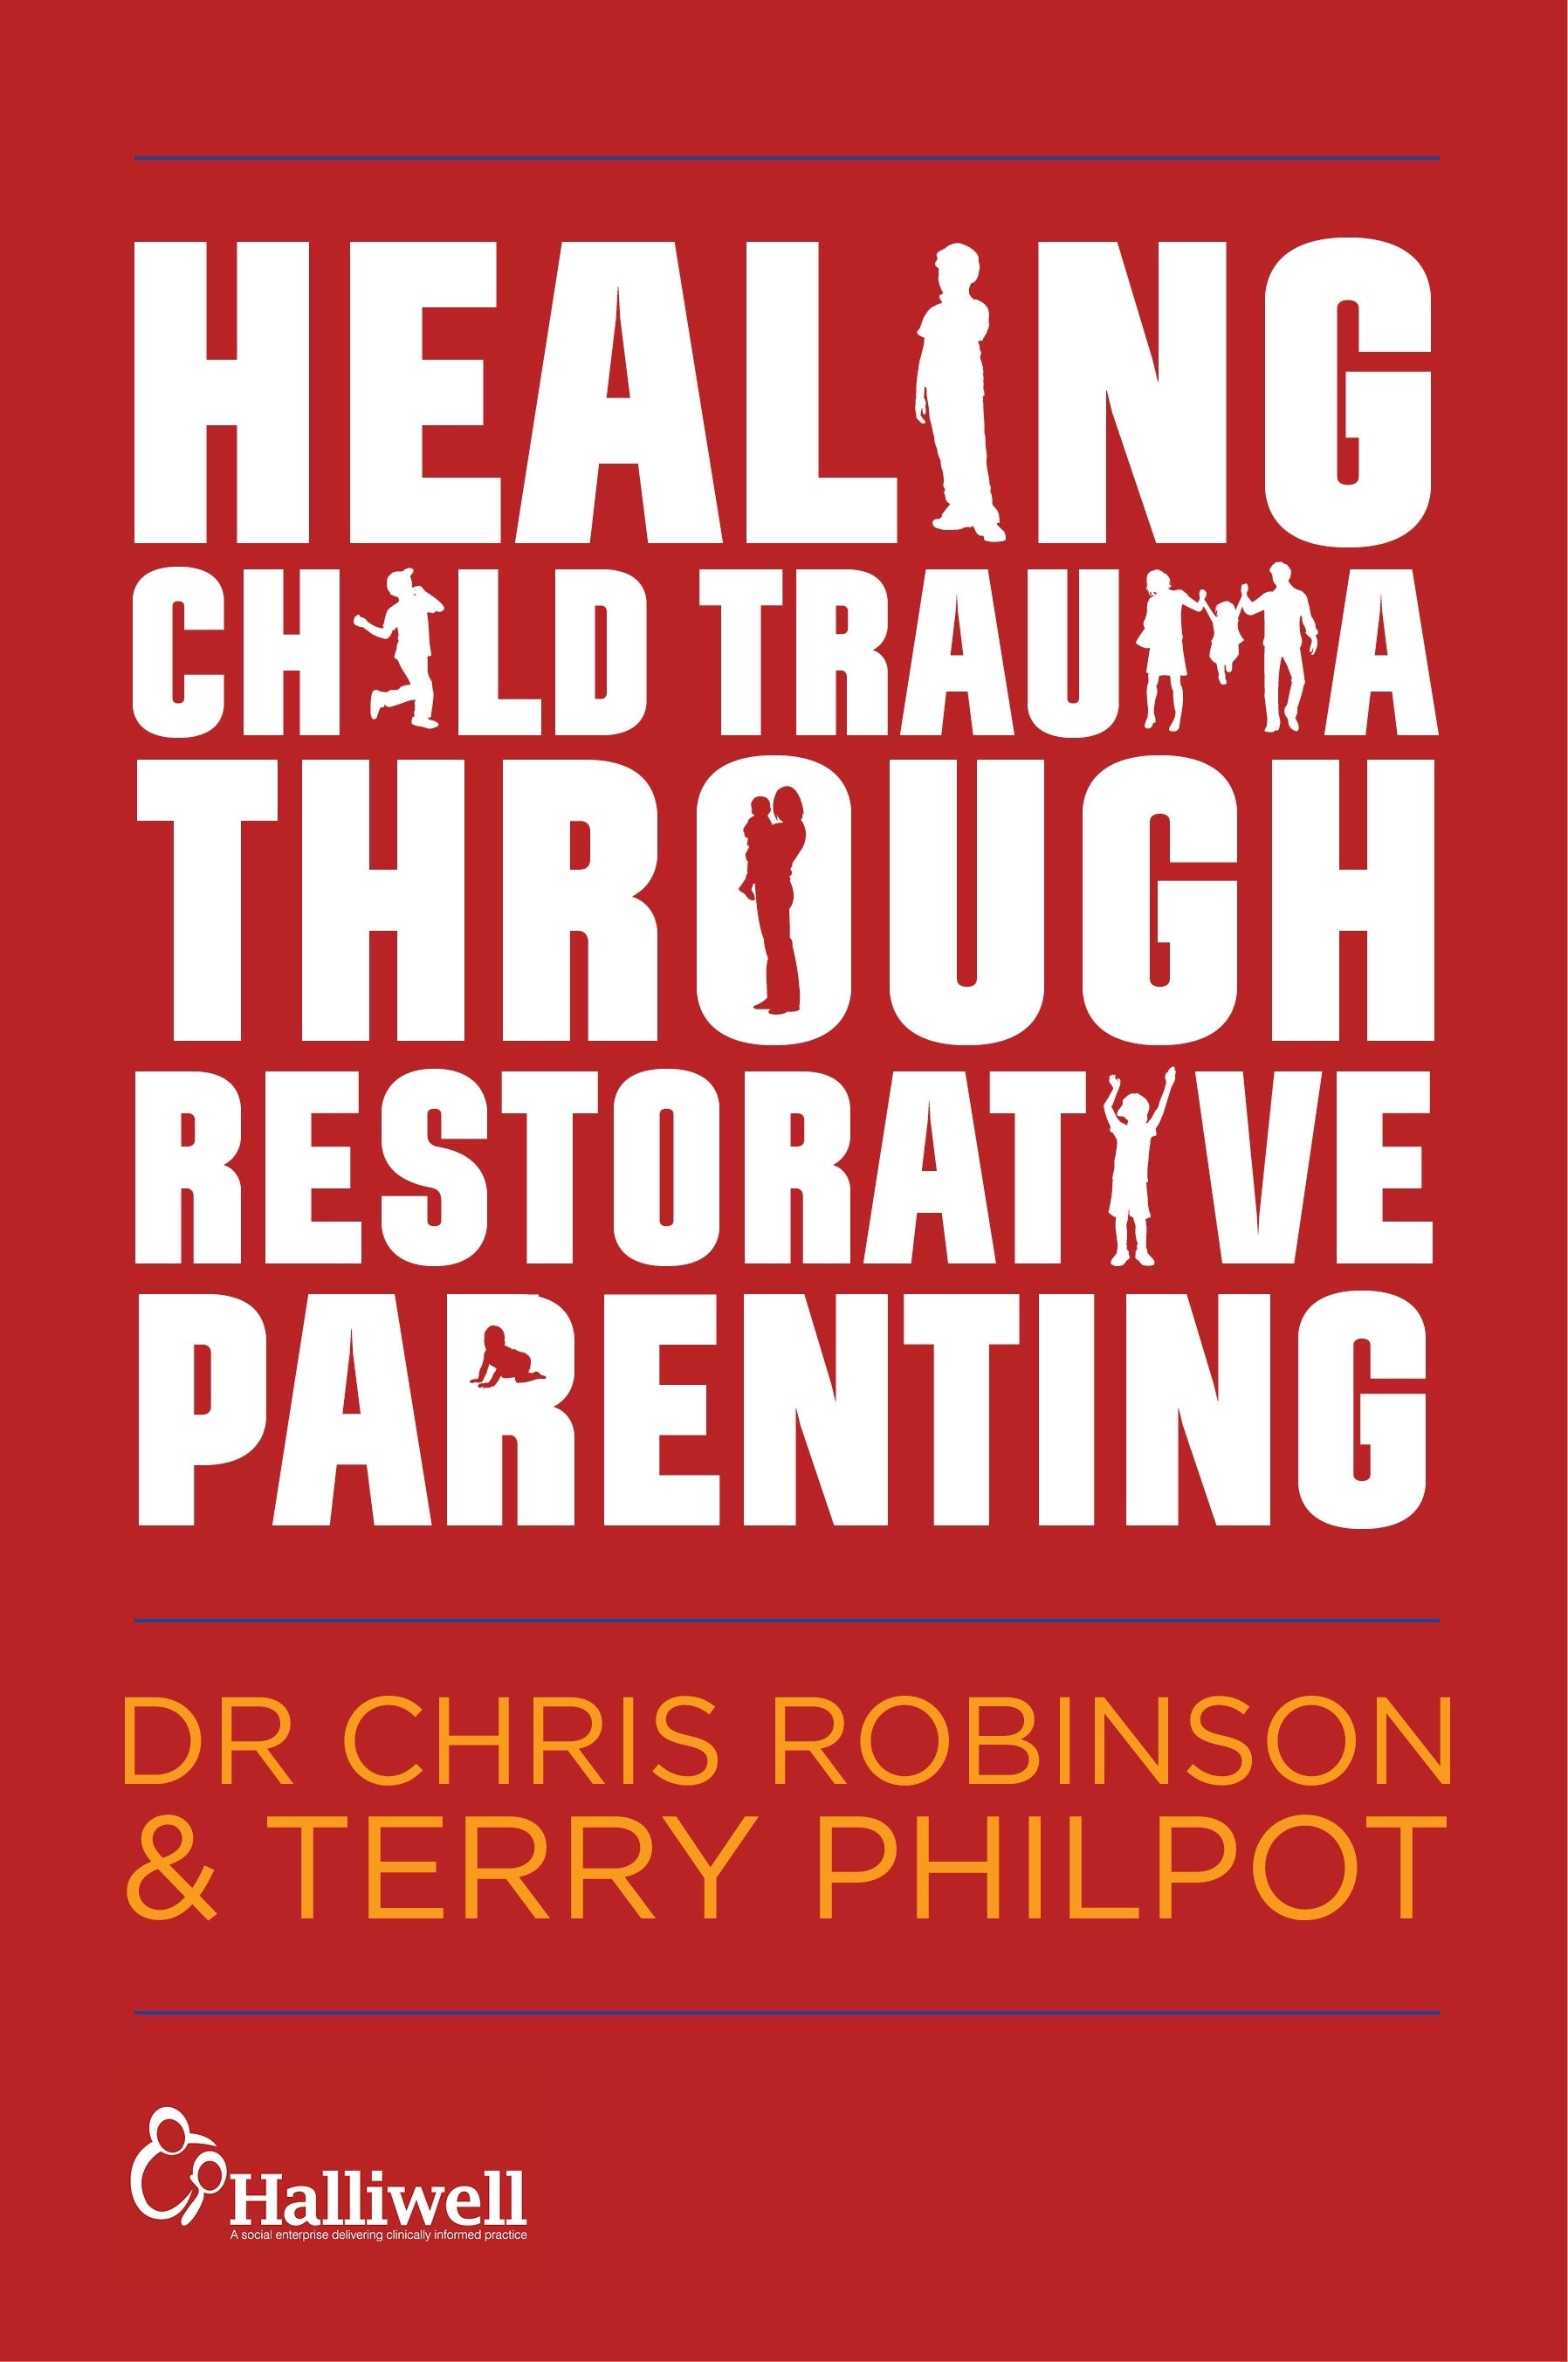 Healing Child Trauma Through Restorative Parenting by Andrew Constable, Karen Mitchell-Mellor, Chris Robinson, Terry Philpot